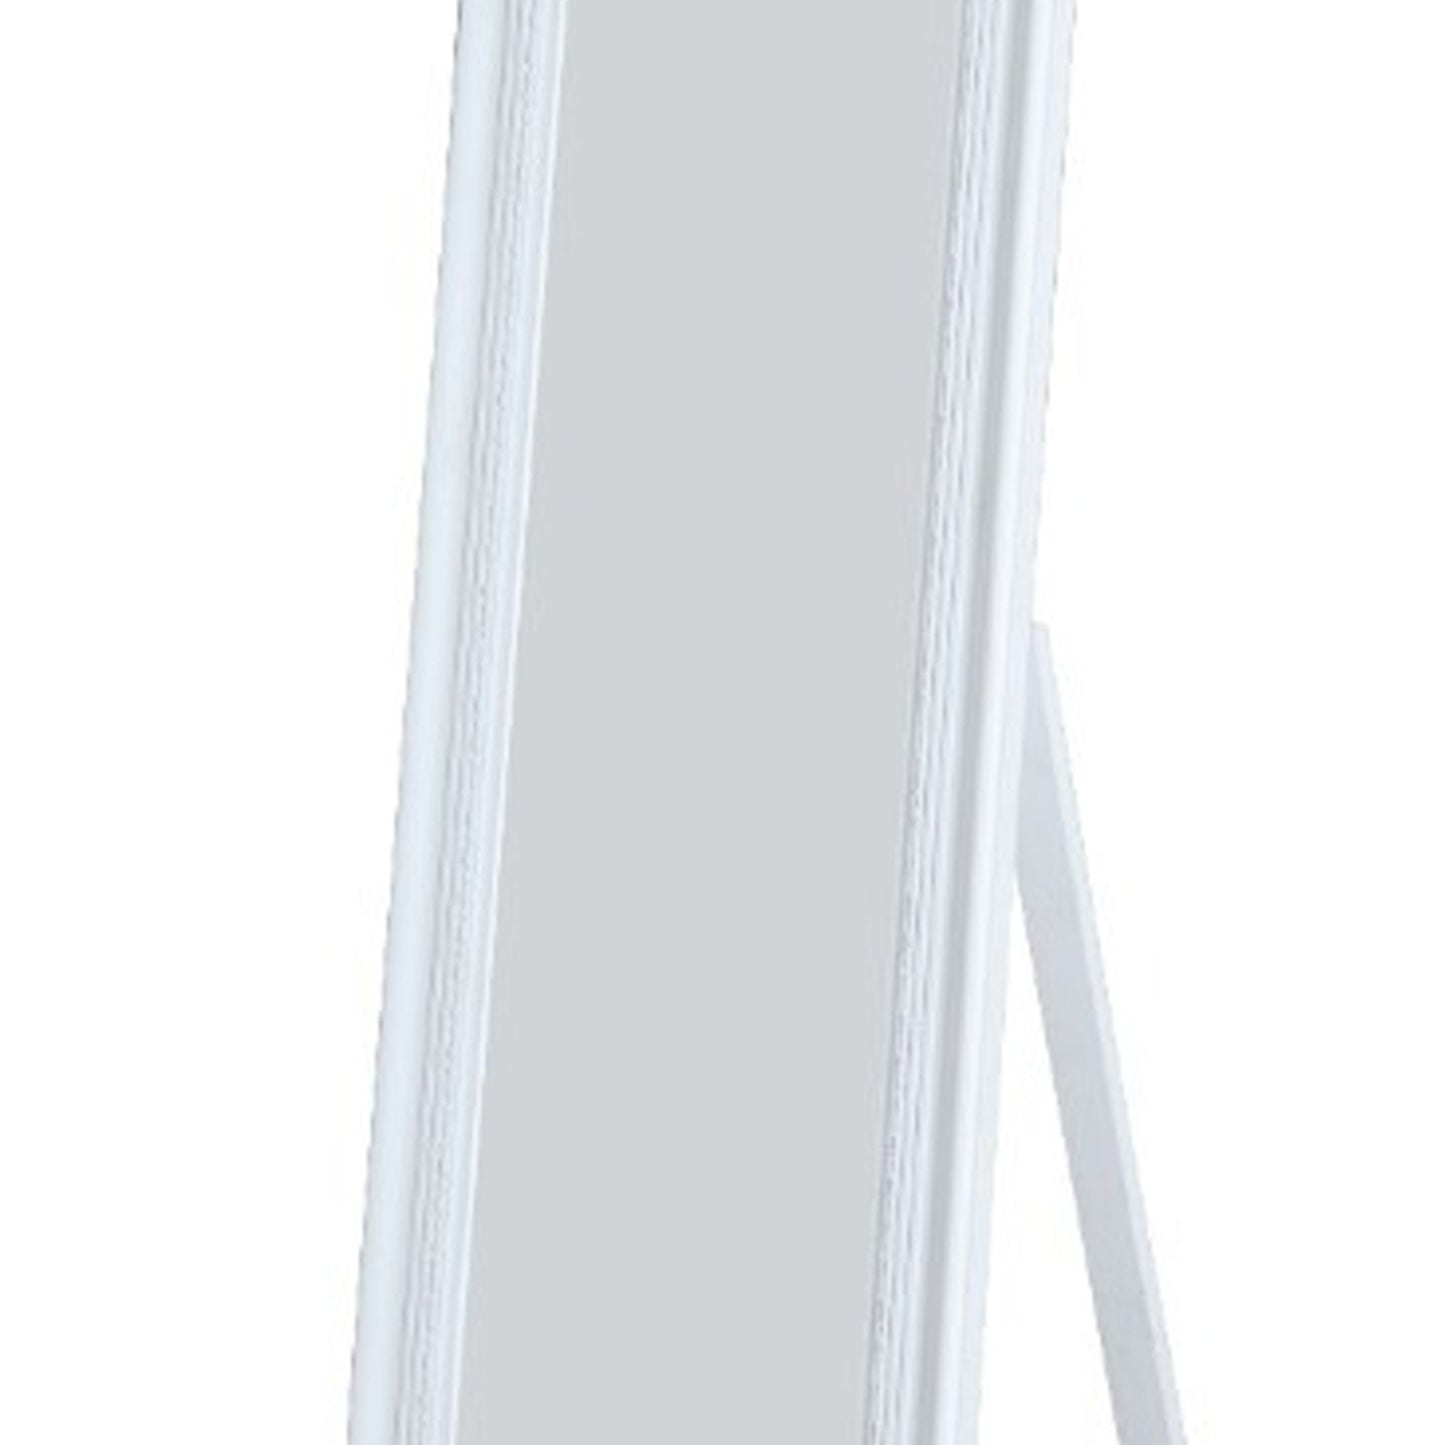 Benzara Cecilia 63" White Full Length Standing Mirror With Decorative Design